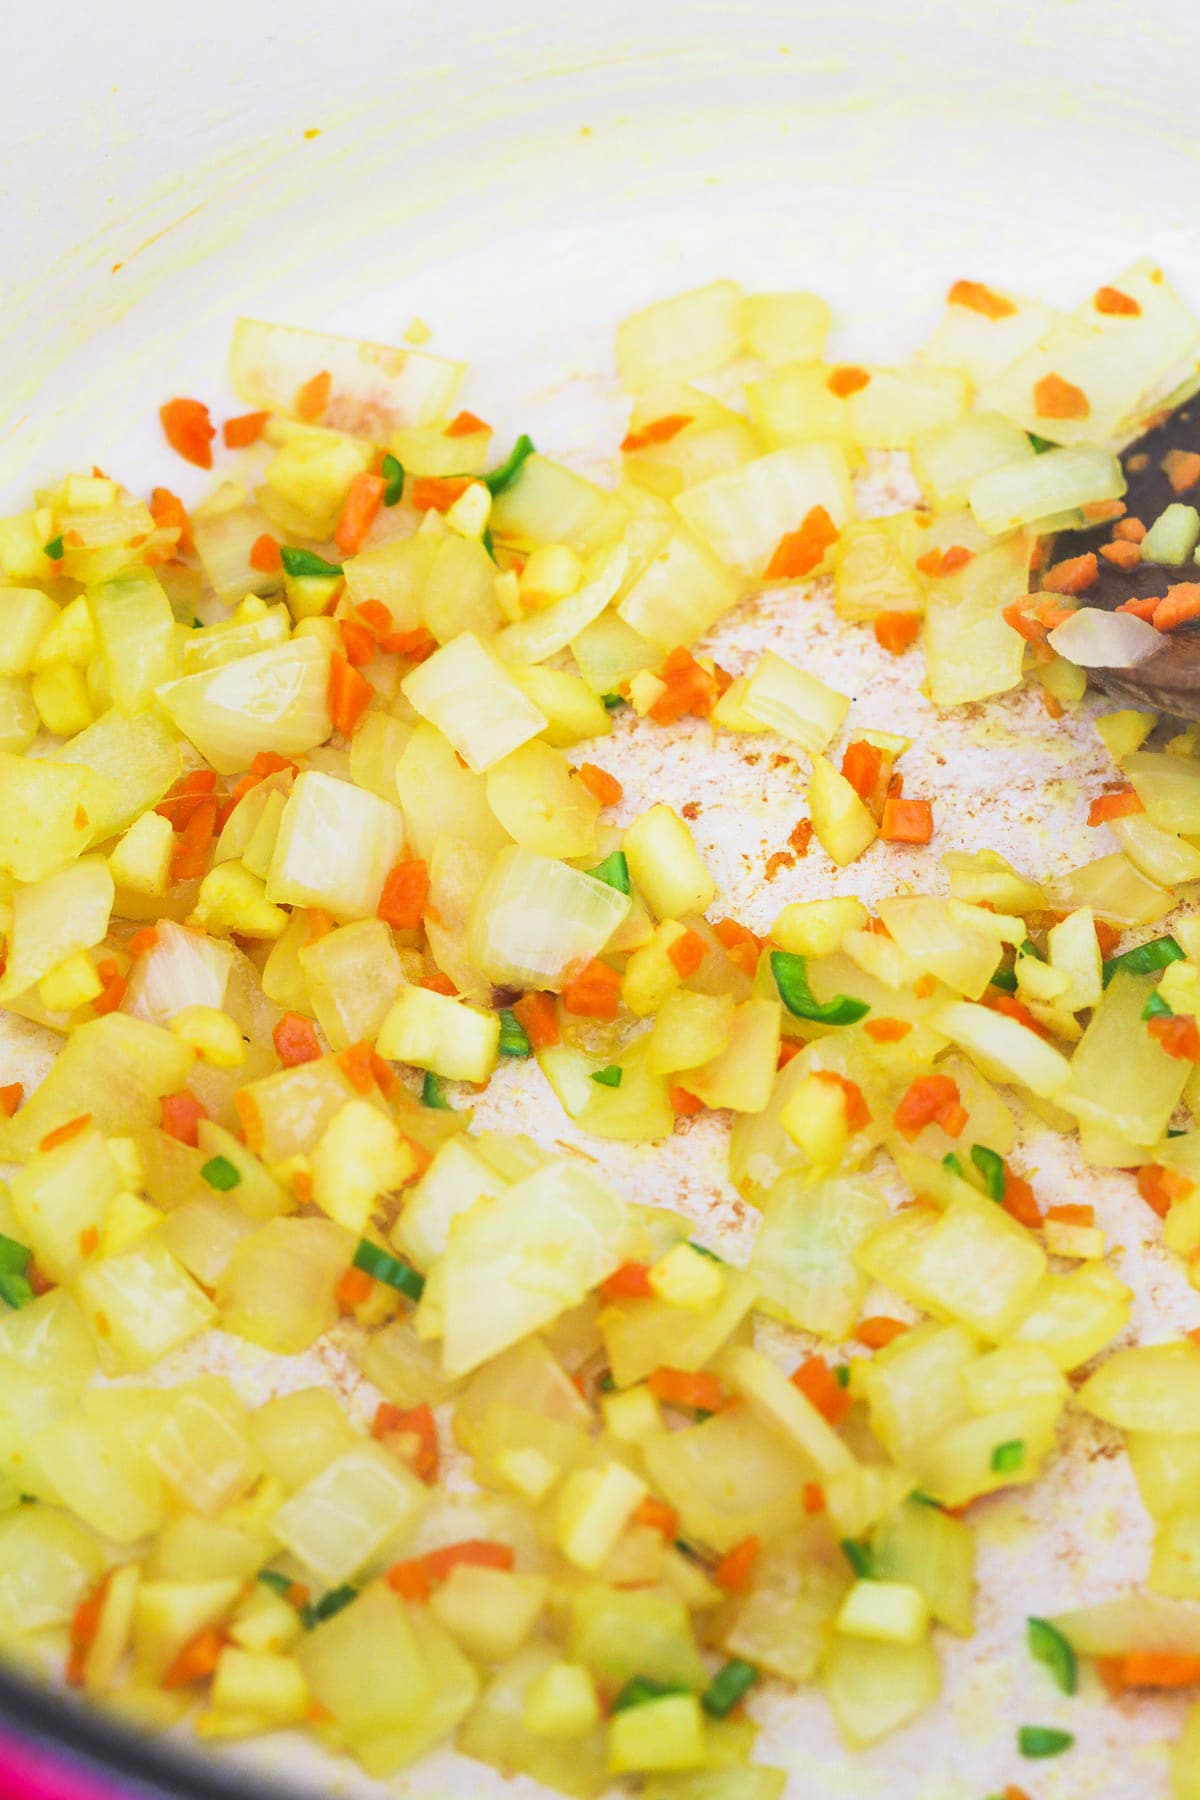 Sauteing diced onion, with garlic, green chili and fresh turmeric